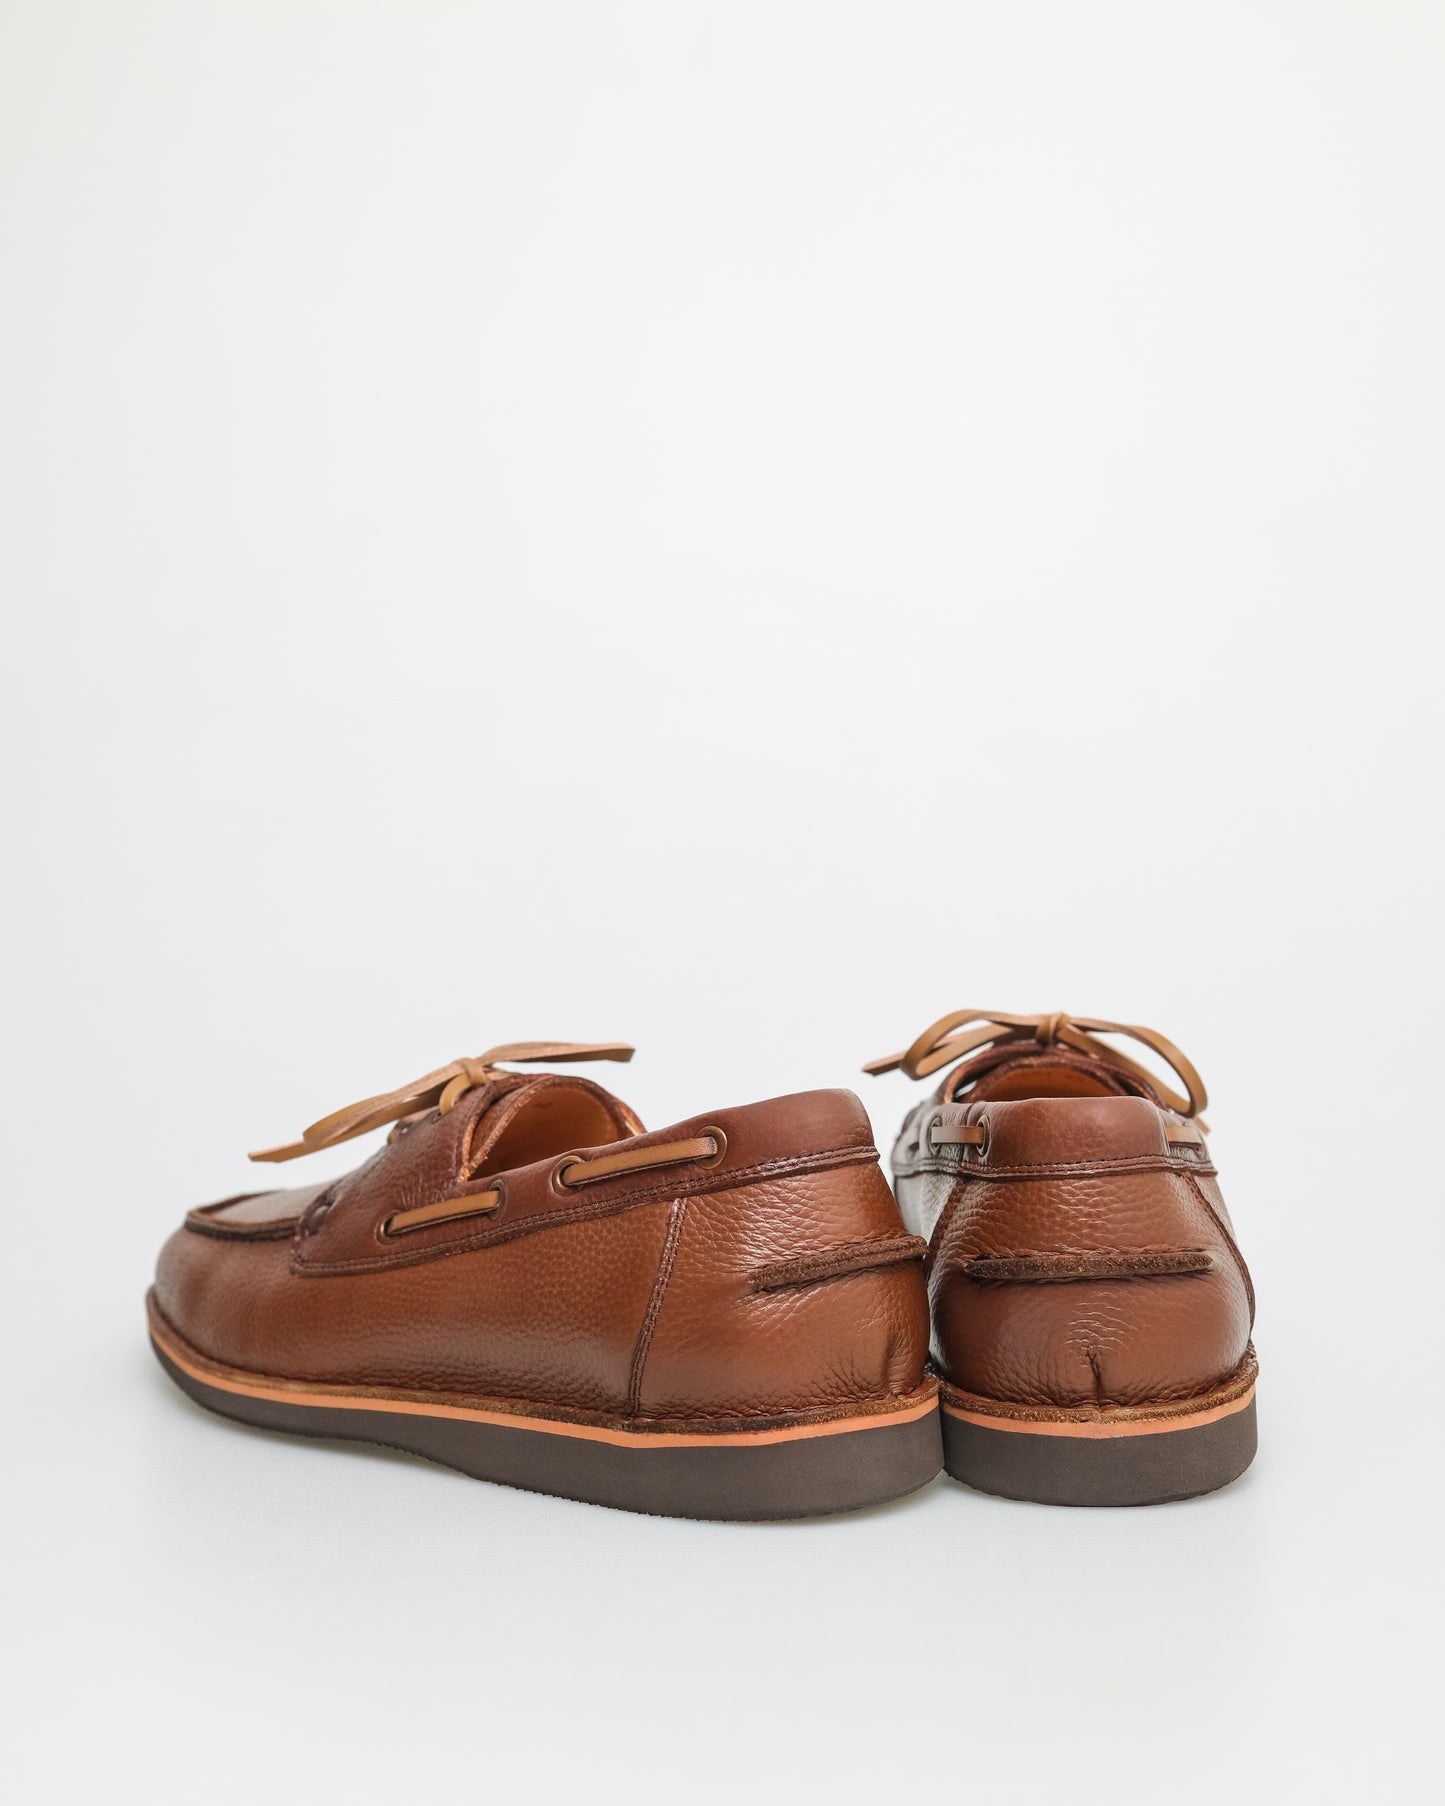 Tomaz C551 Men's Leather Boat Shoes (Brown)